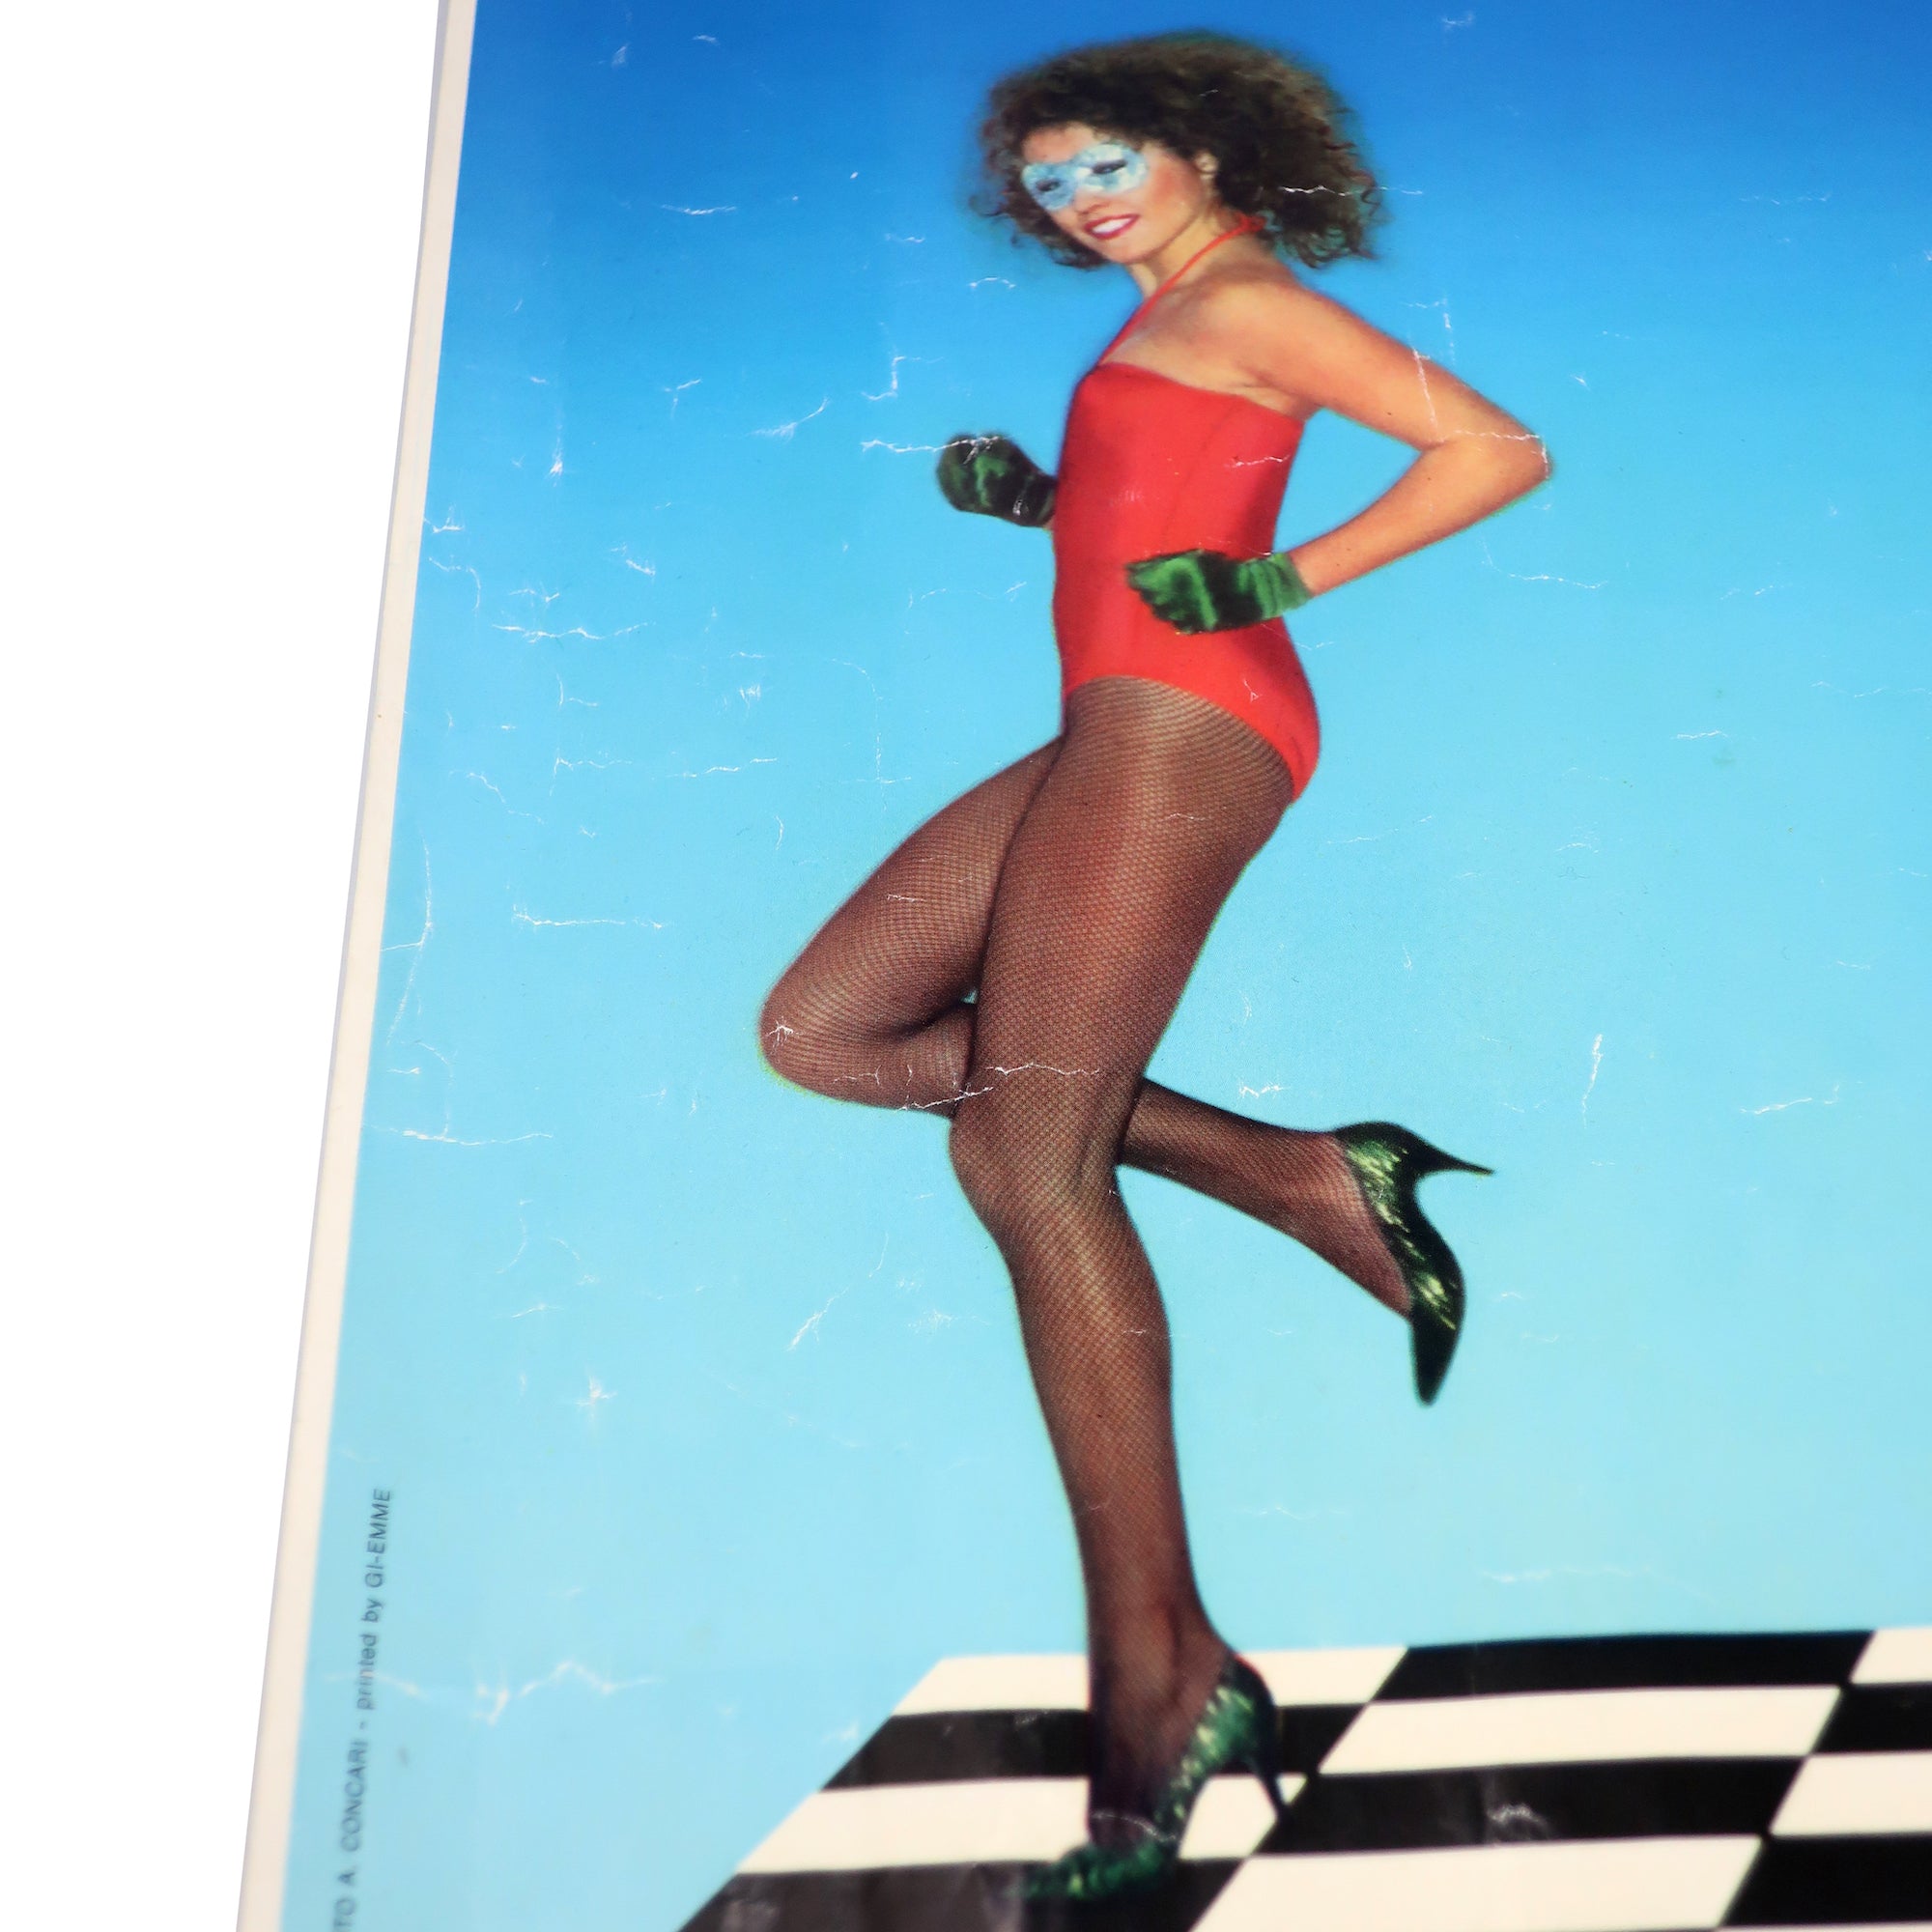 Vintage Fiorucci Dancing Ladies on Checkerboard Poster